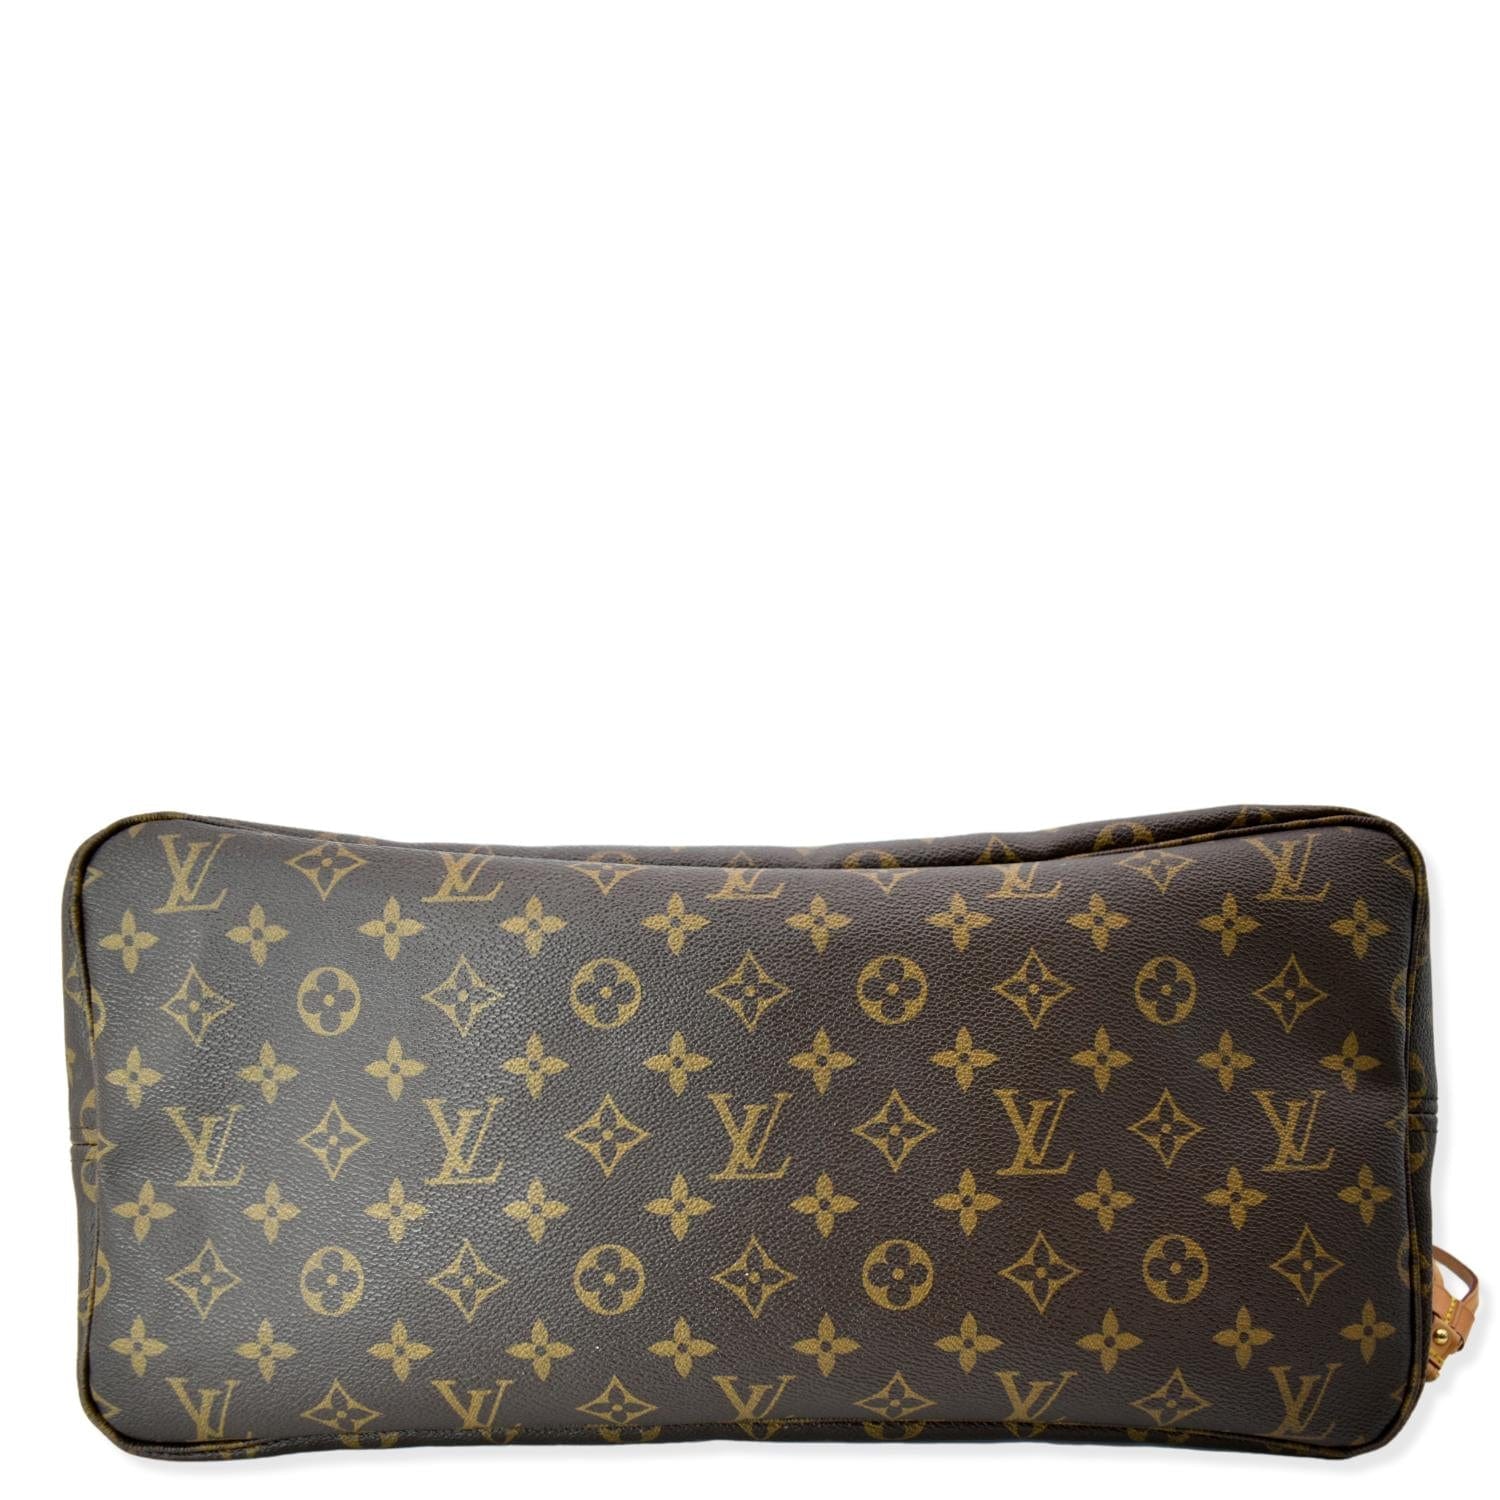 Five Must-Have Accessories For Your Louis Vuitton Handbag - Purse